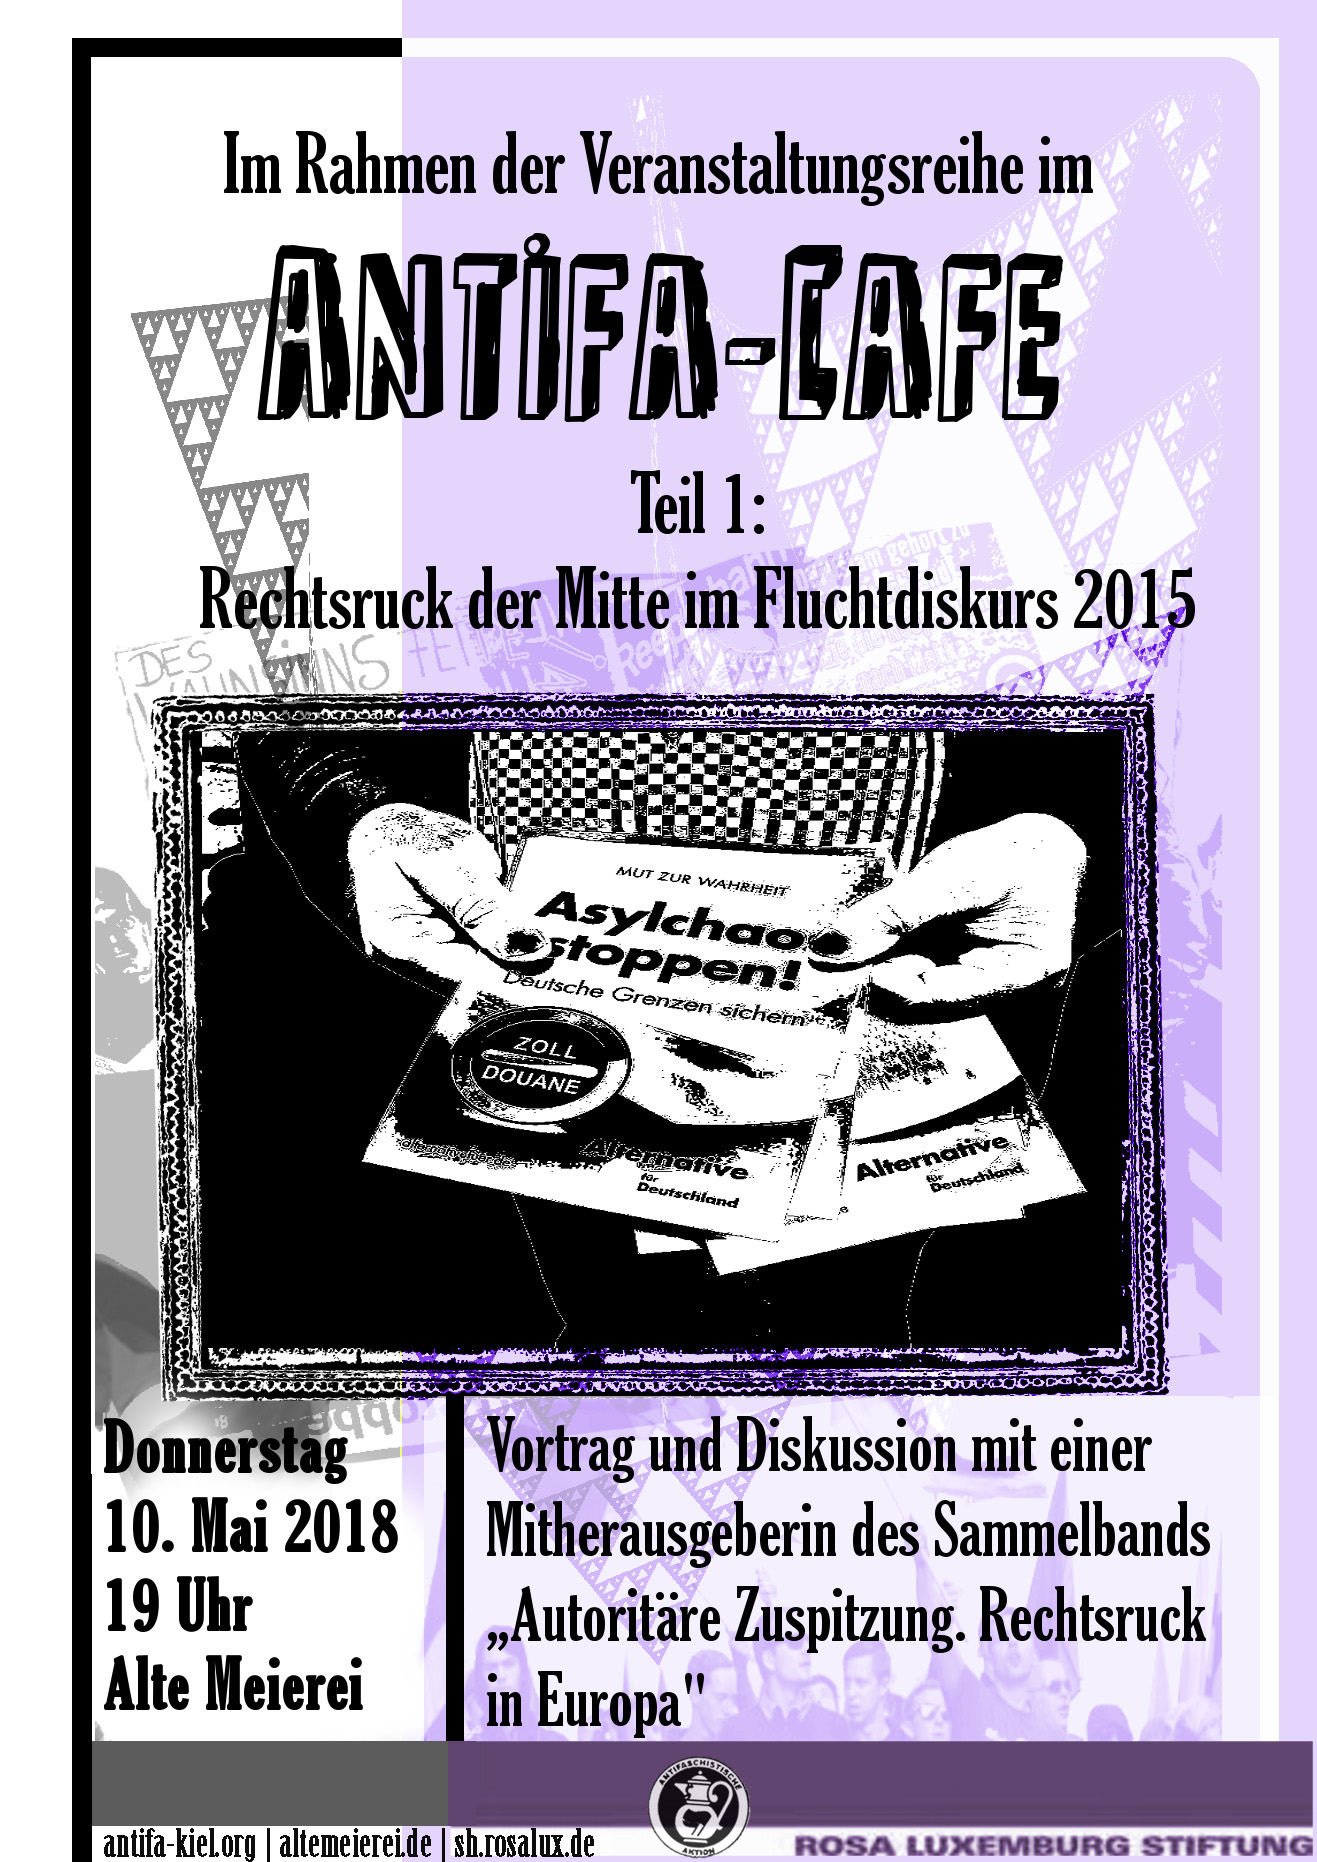 http://www.neu.antifa-kiel.org/wp-content/uploads/import/antifa-cafe/Einzelflyer Cafe reihe_mai.jpg